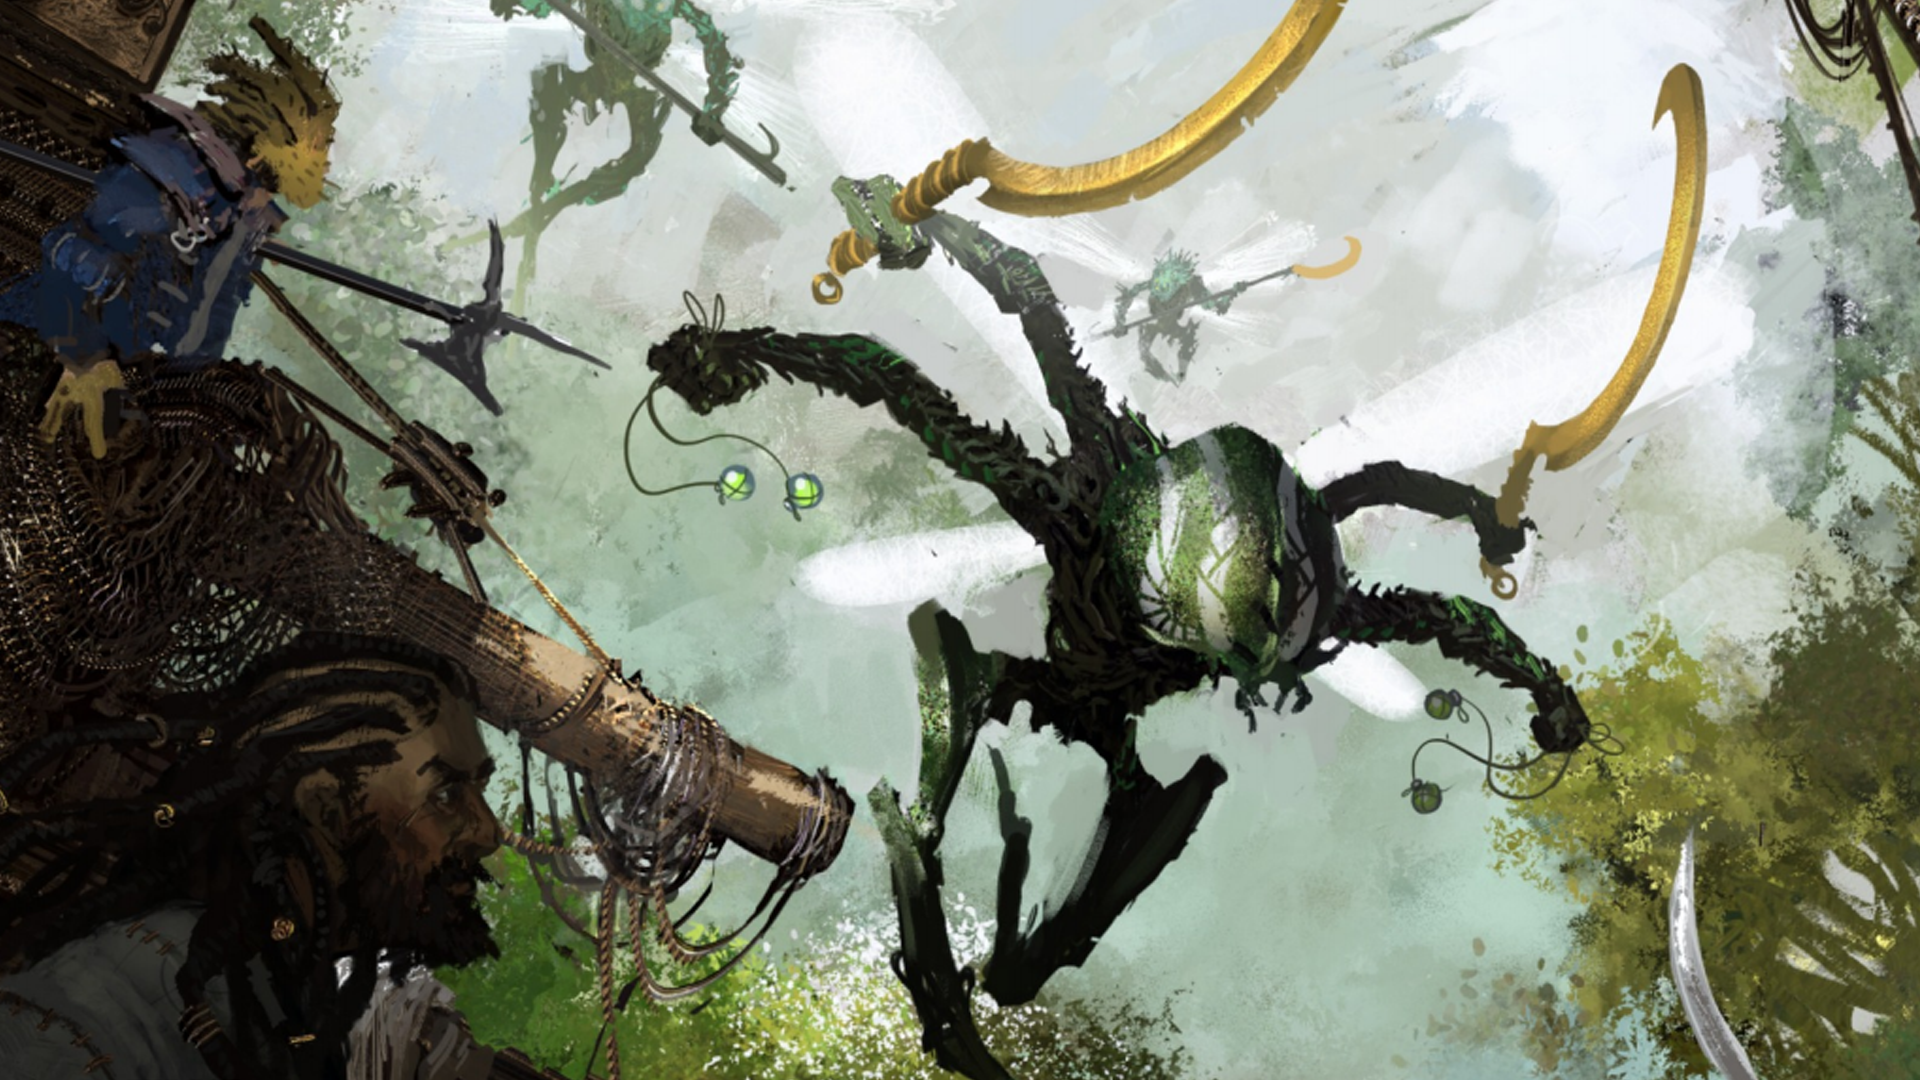 Wildsea RPG cover artwork